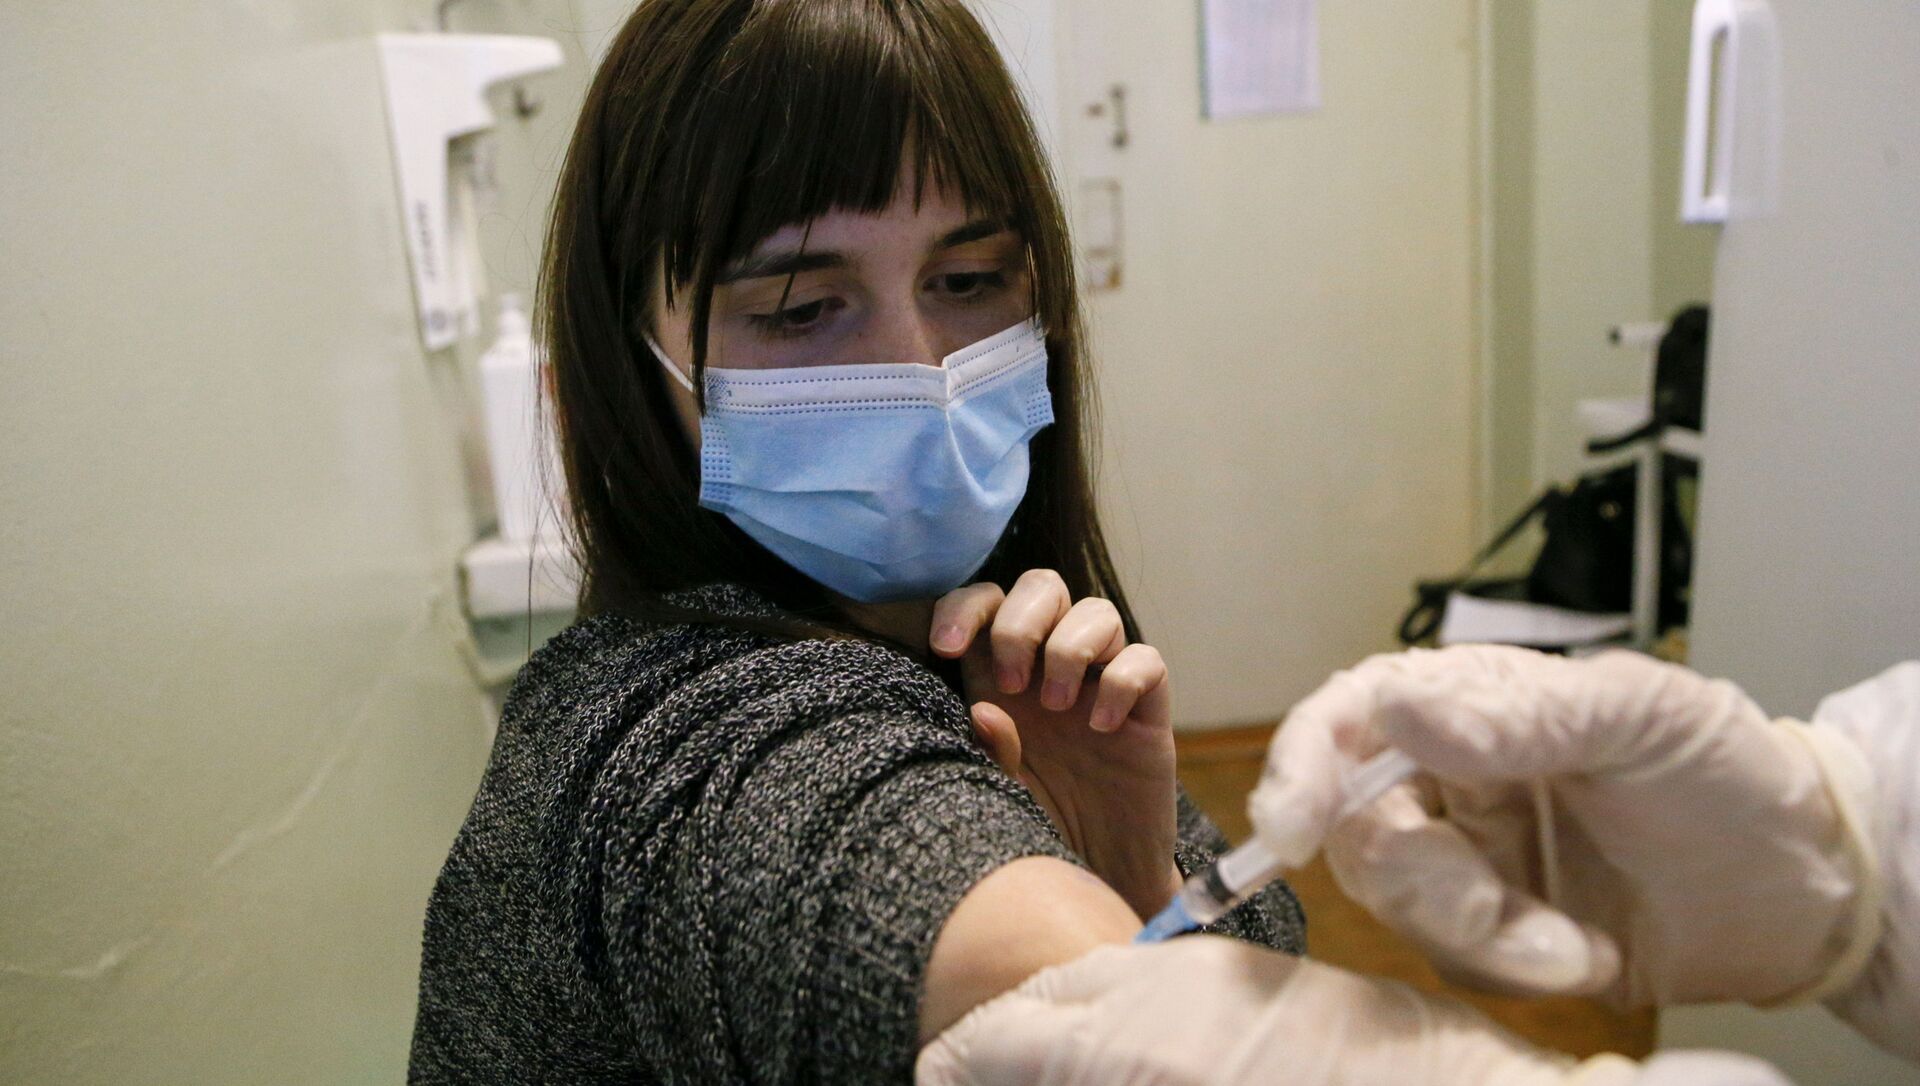 Mulher recebe dose da vacina contra a COVID-19 Sputnik V na Ucrânia - Sputnik Brasil, 1920, 01.02.2021